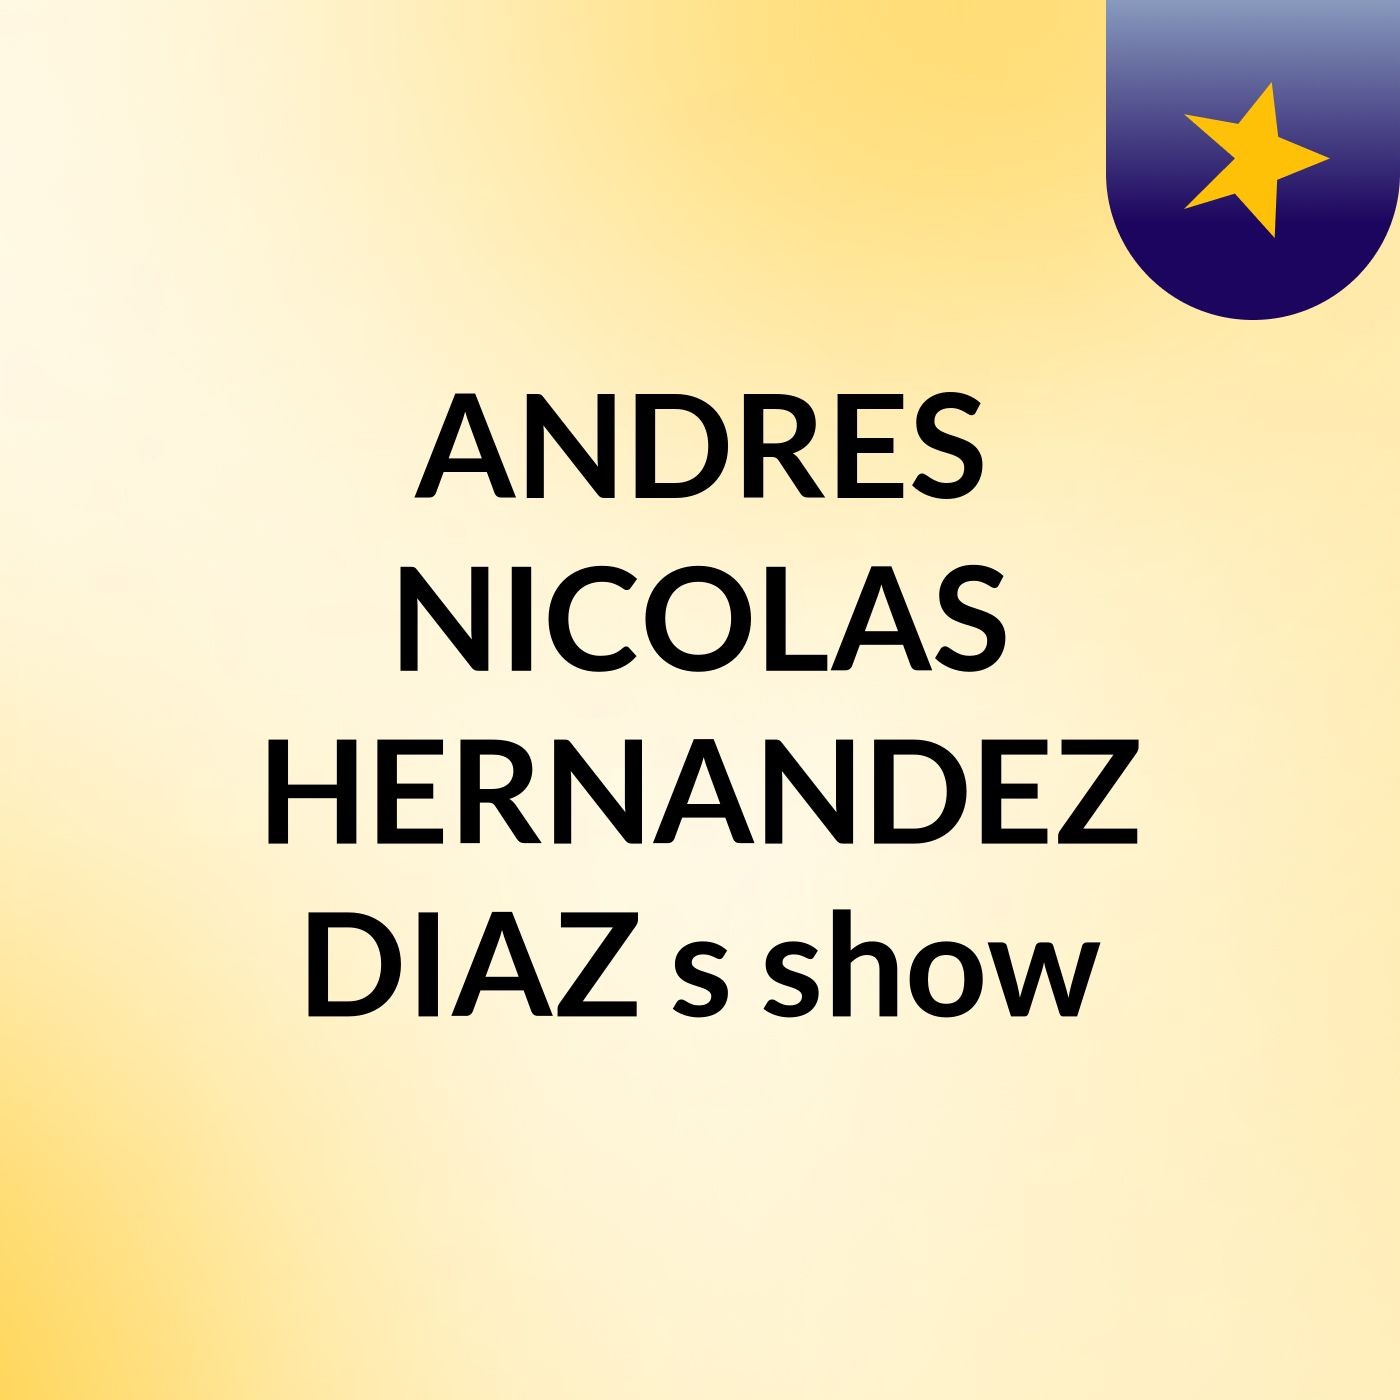 Episode 5 - ANDRES NICOLAS HERNANDEZ DIAZ's show